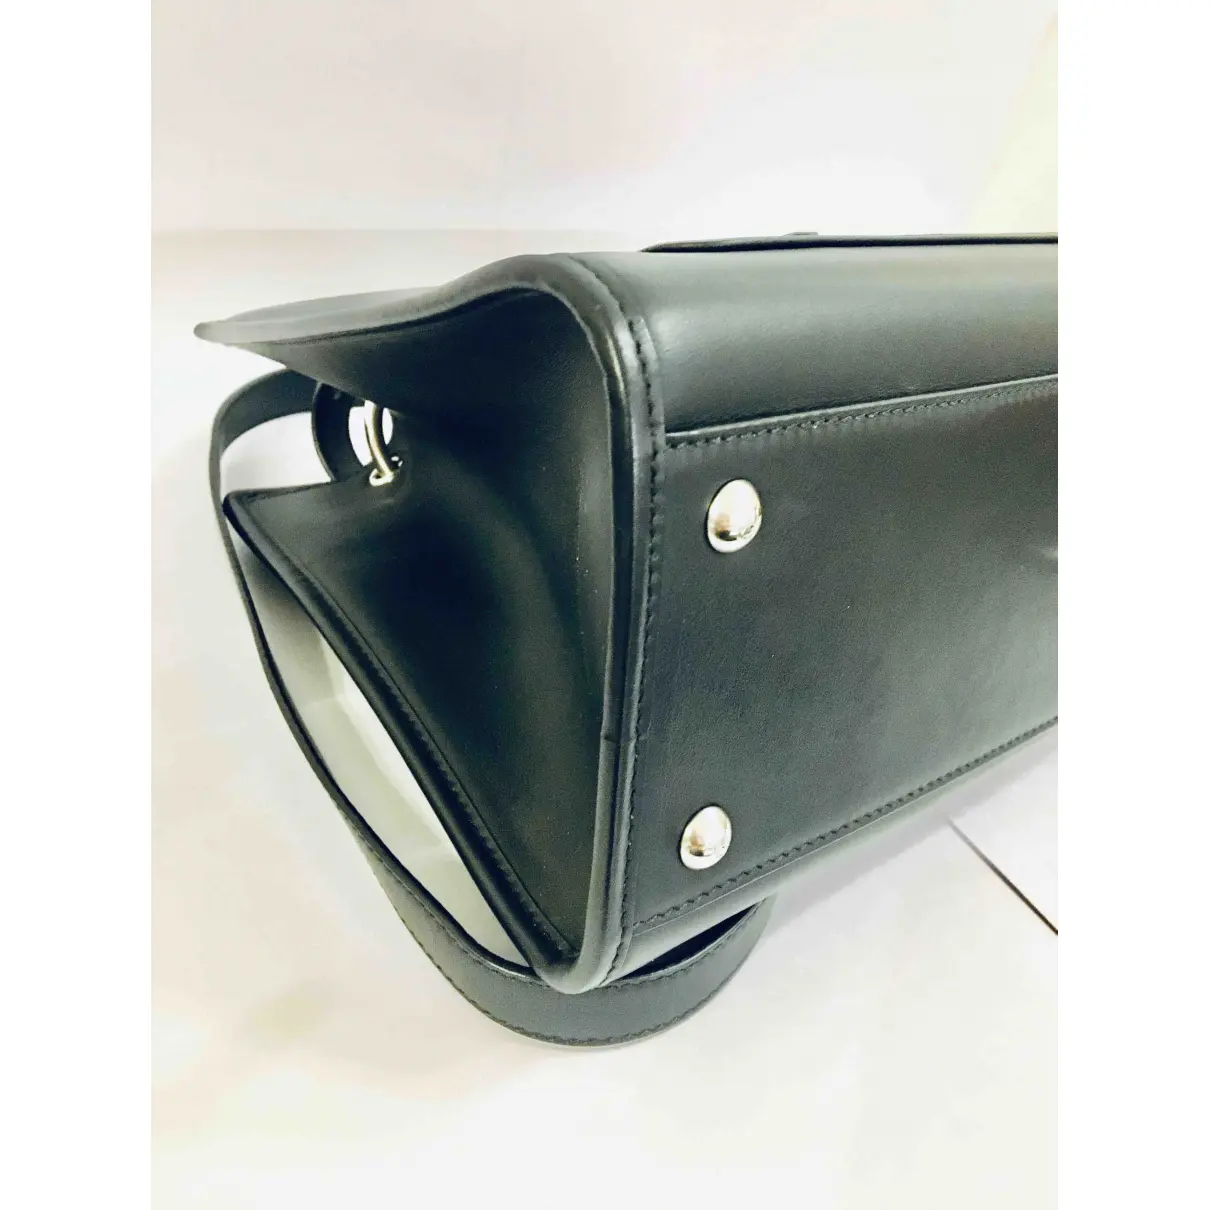 Runaway leather handbag Fendi